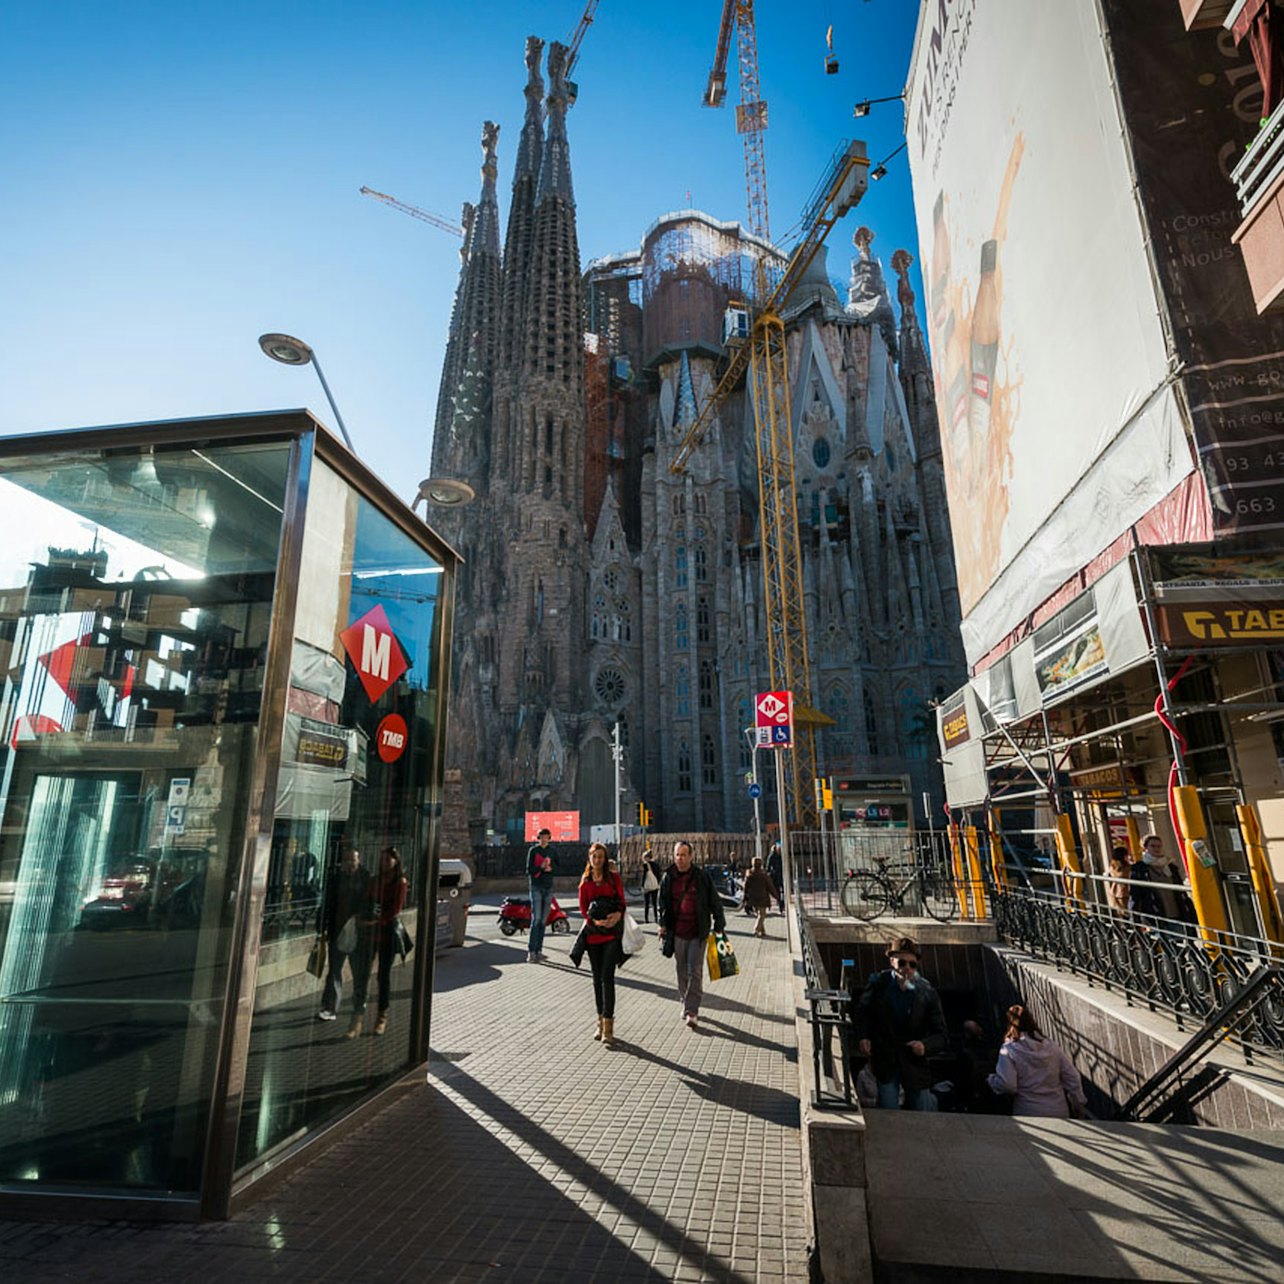 Hola Barcelona: Tarjeta de transporte público - Alojamientos en Barcelona